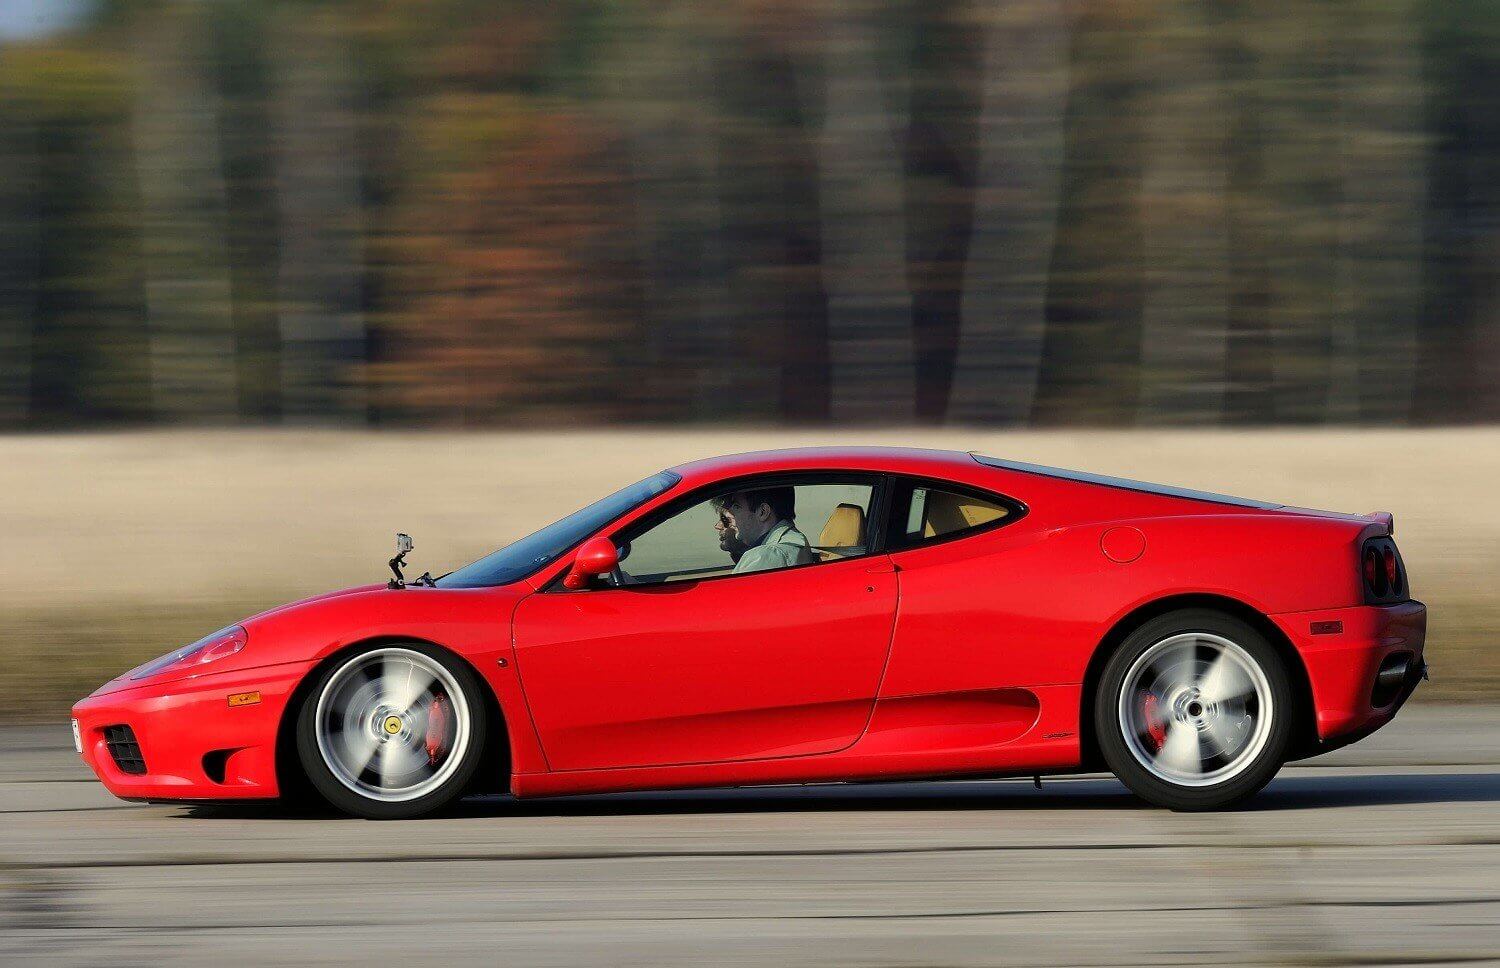 Jazda Ferrari na torze